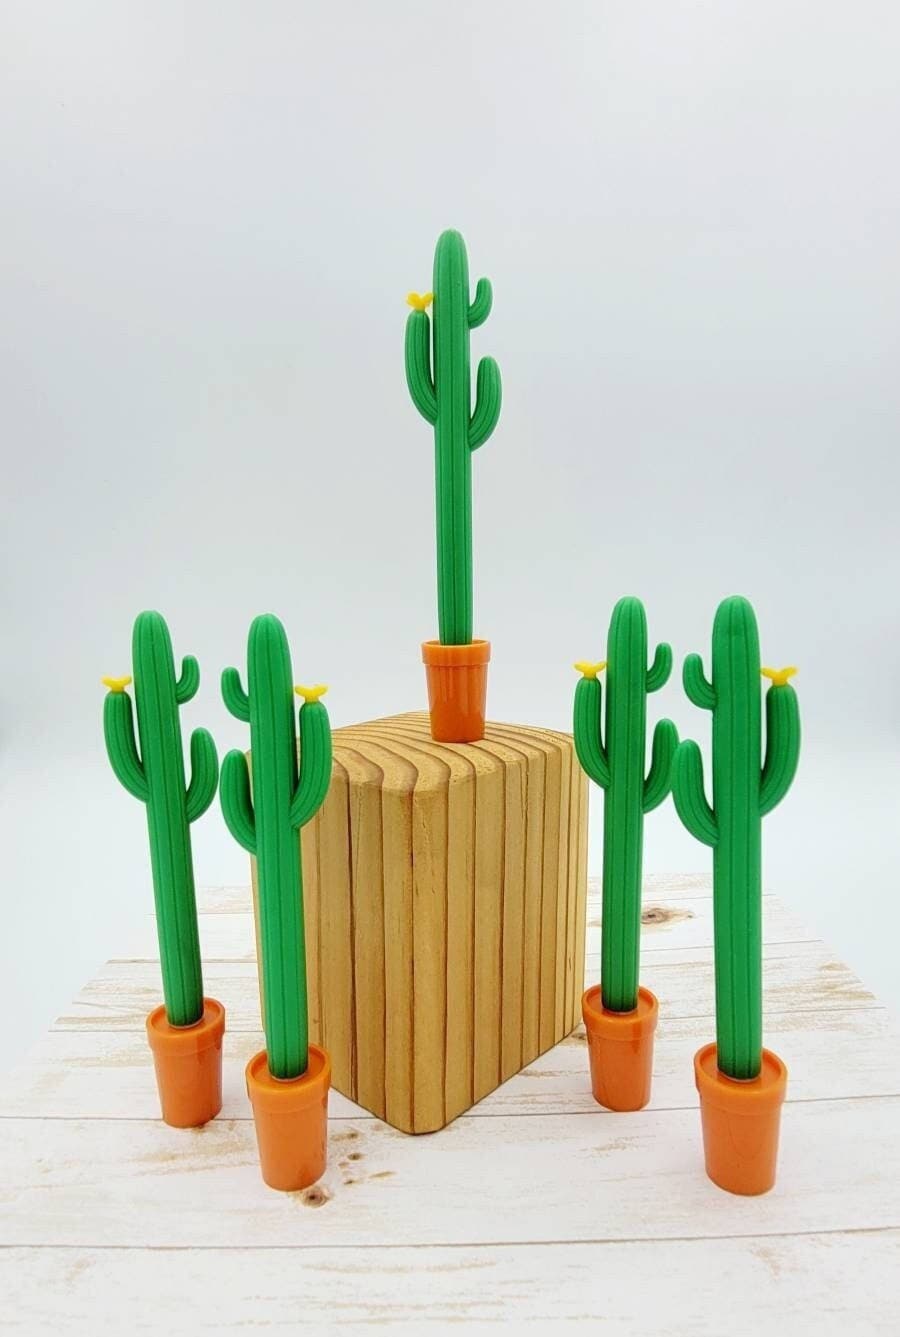  Legami - Desk Friends 12.5 x 7.5 cm Cactus Theme Ceramic Pen  Holder for Desk Hand Painted : Office Products